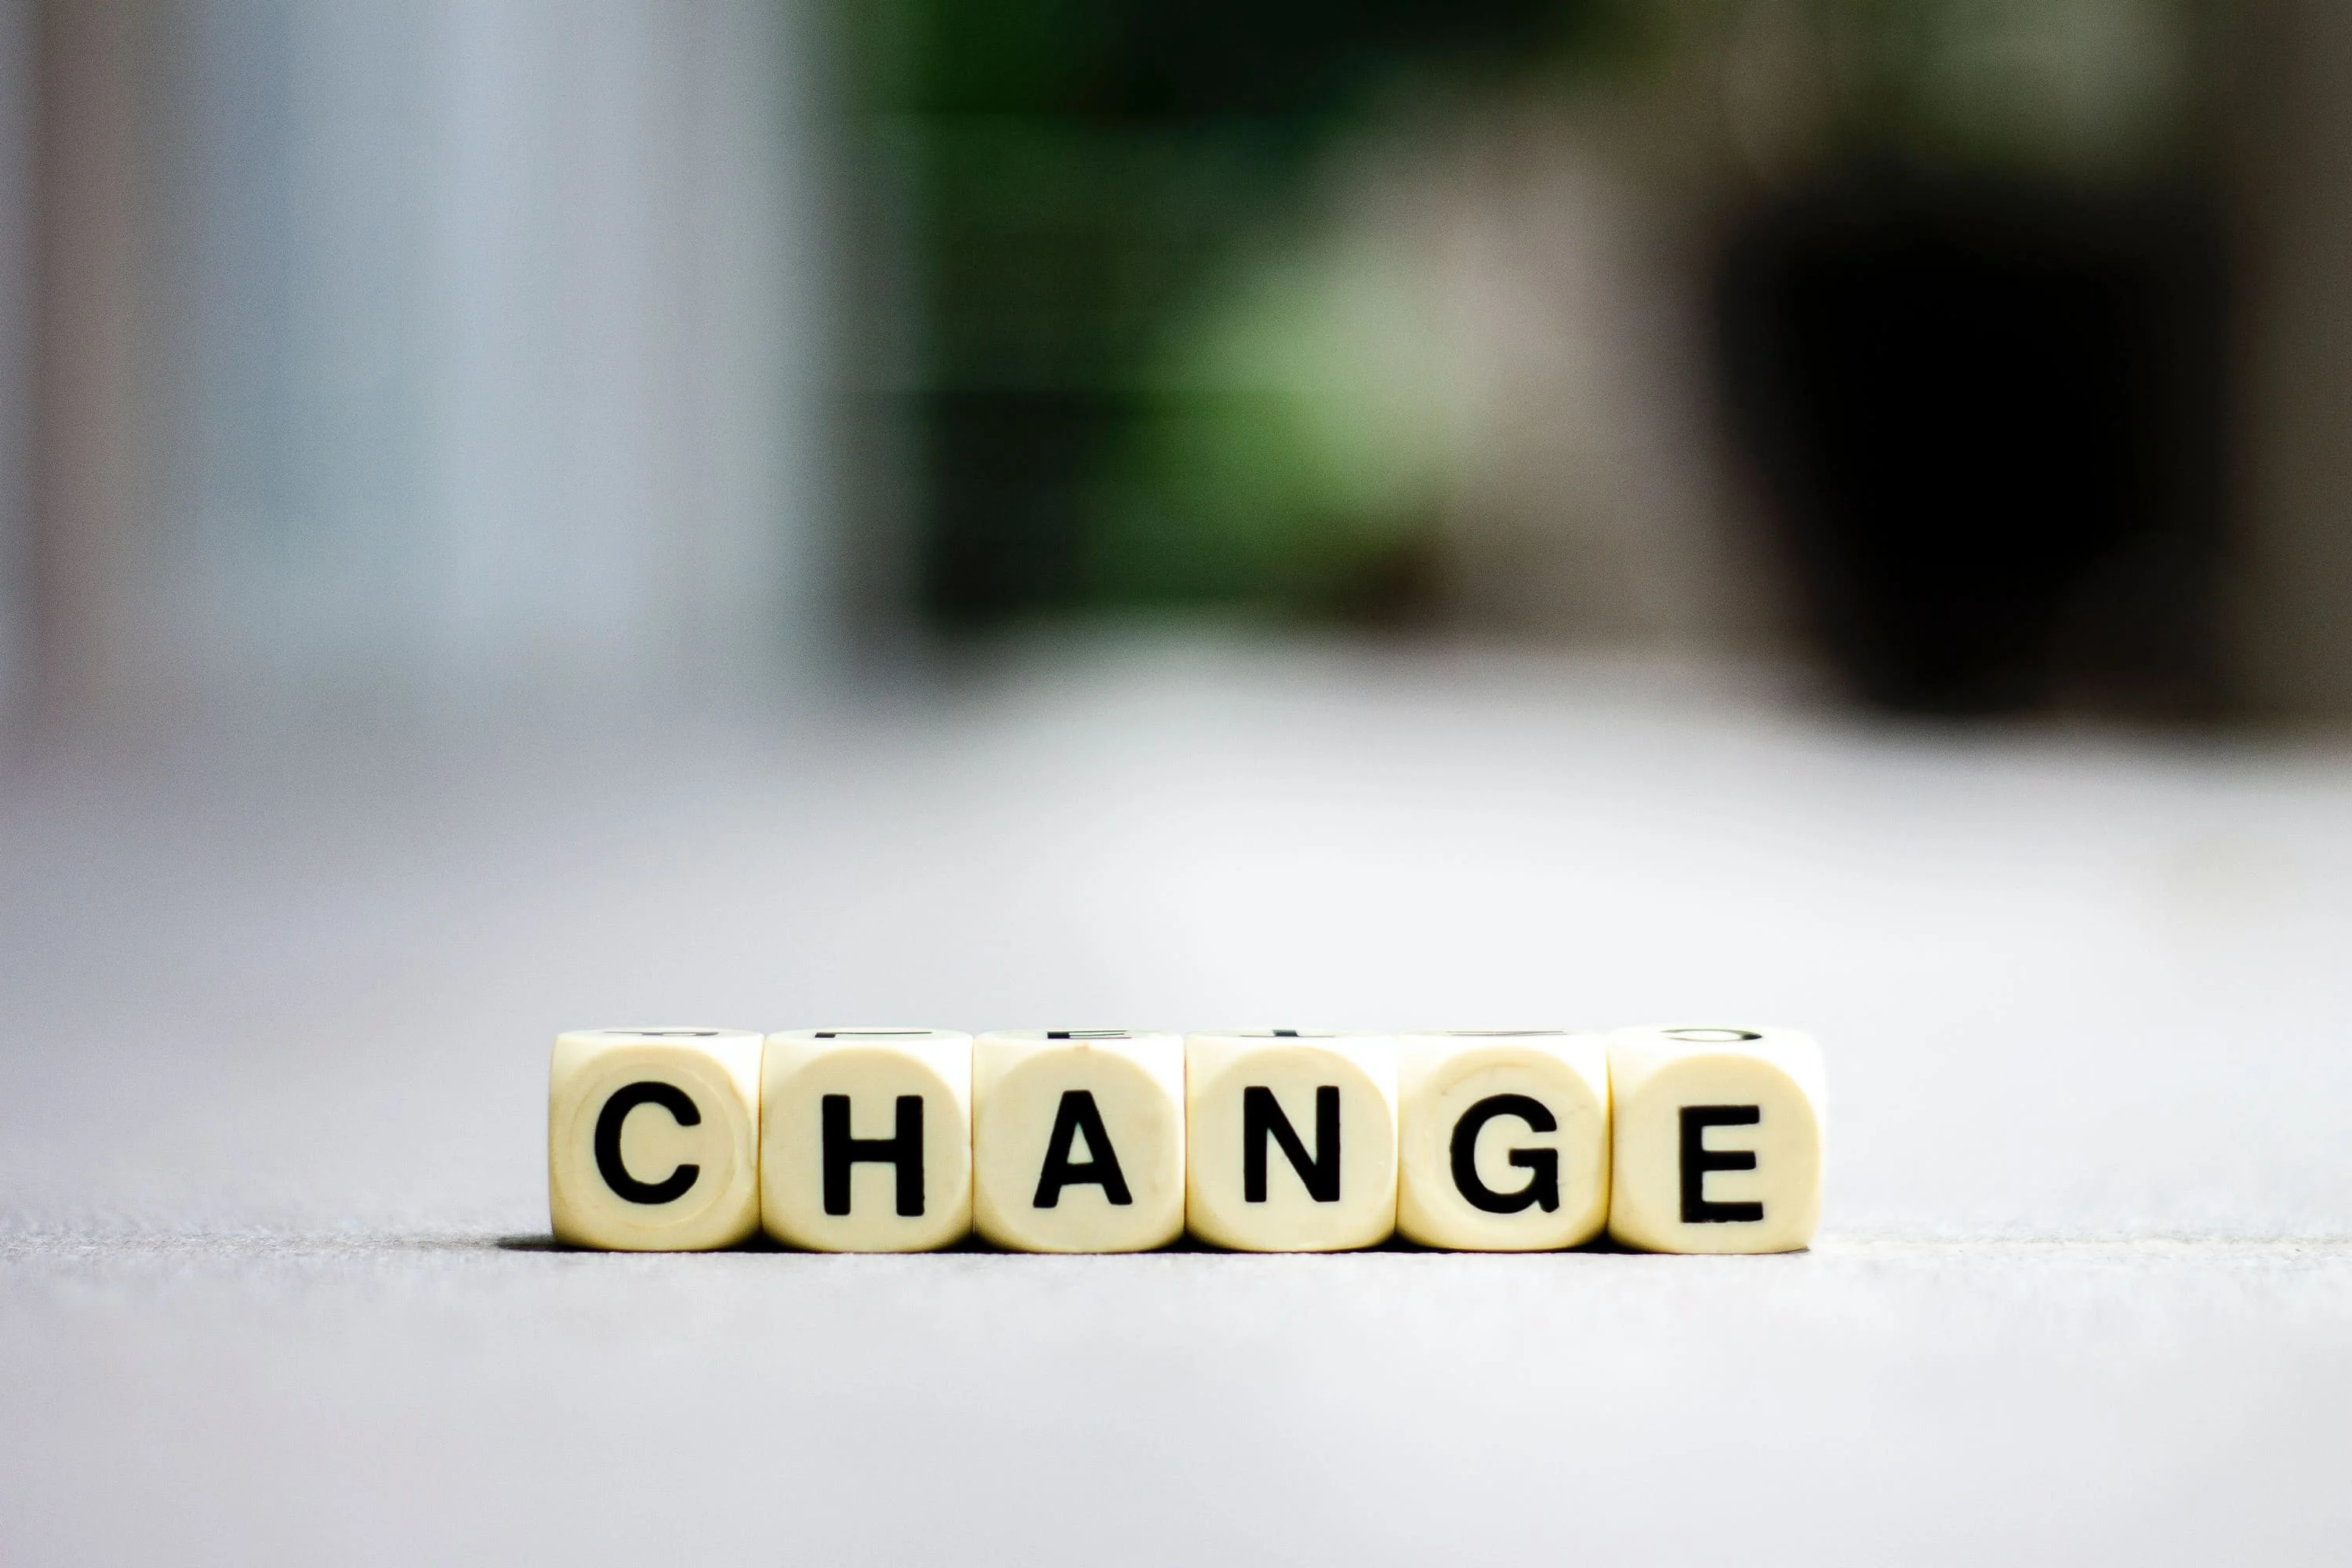 Letter blocks spelling out "change"